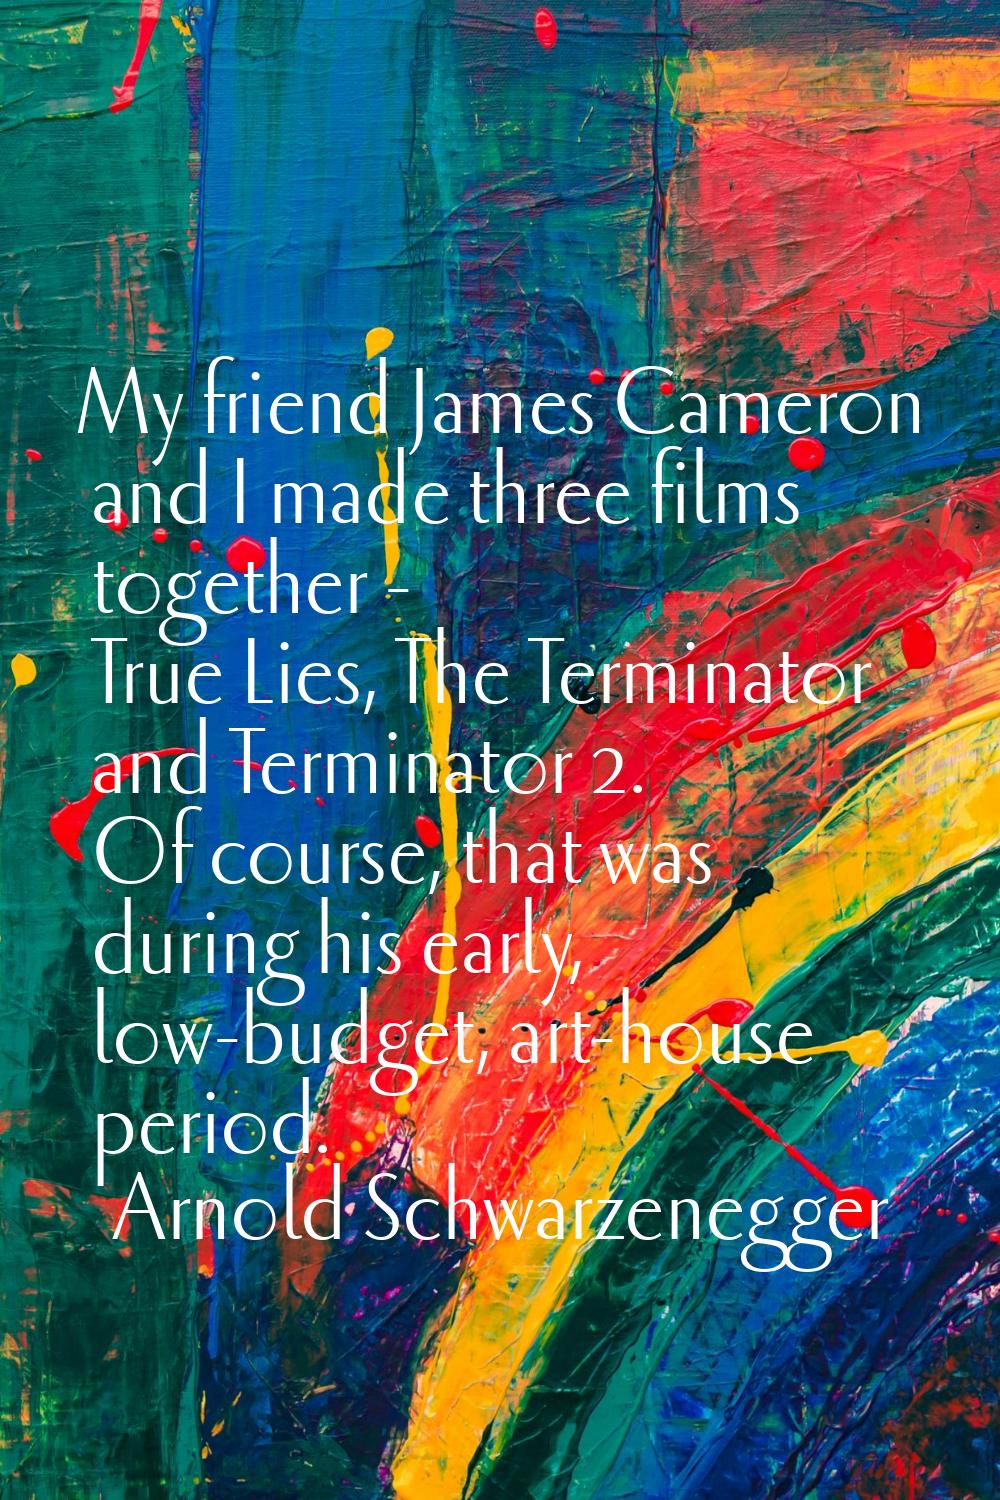 My friend James Cameron and I made three films together - True Lies, The Terminator and Terminator 